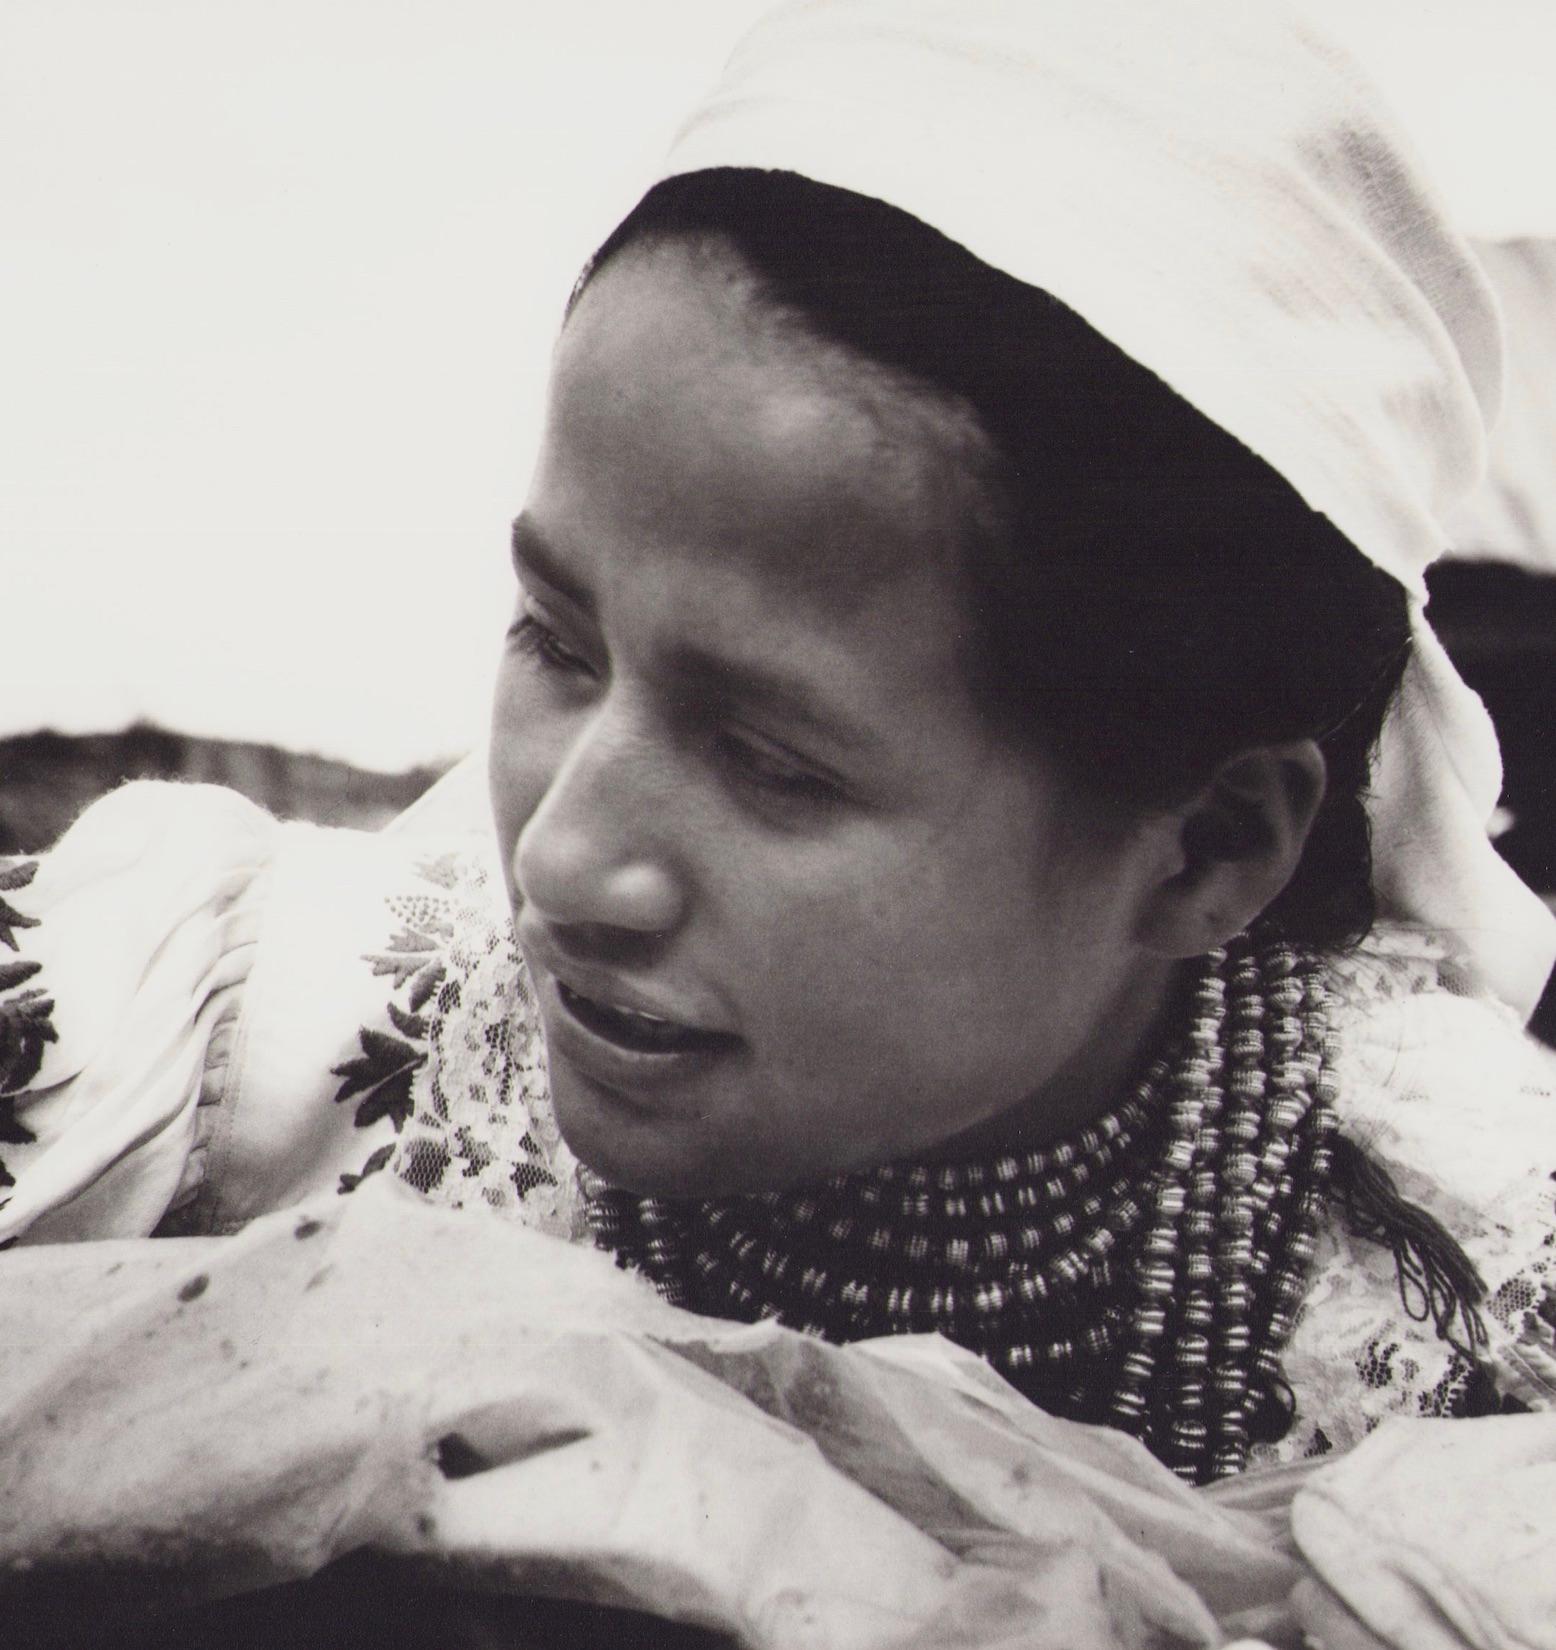 Ecuador, Indigenous Woman, Black and White Photography, 1960s, 21, 4 x 29 cm - Gray Portrait Photograph by Hanna Seidel